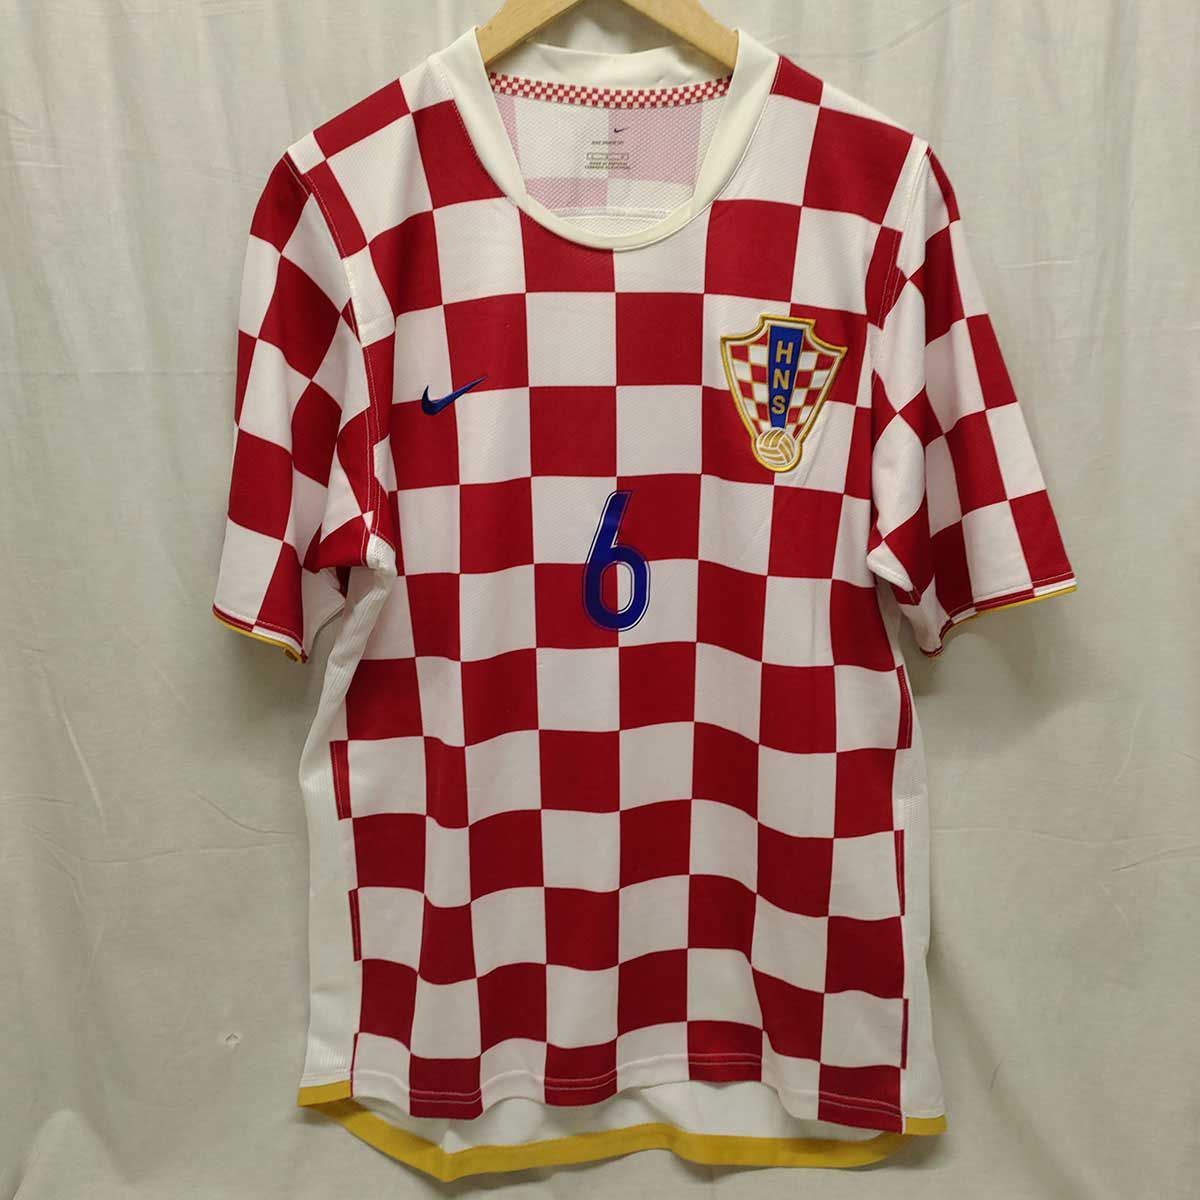 NIKE ナイキ サッカー クロアチア代表 2006-07 ユニフォーム #6 ユリカ・ブラニェス サイズL - メルカリ